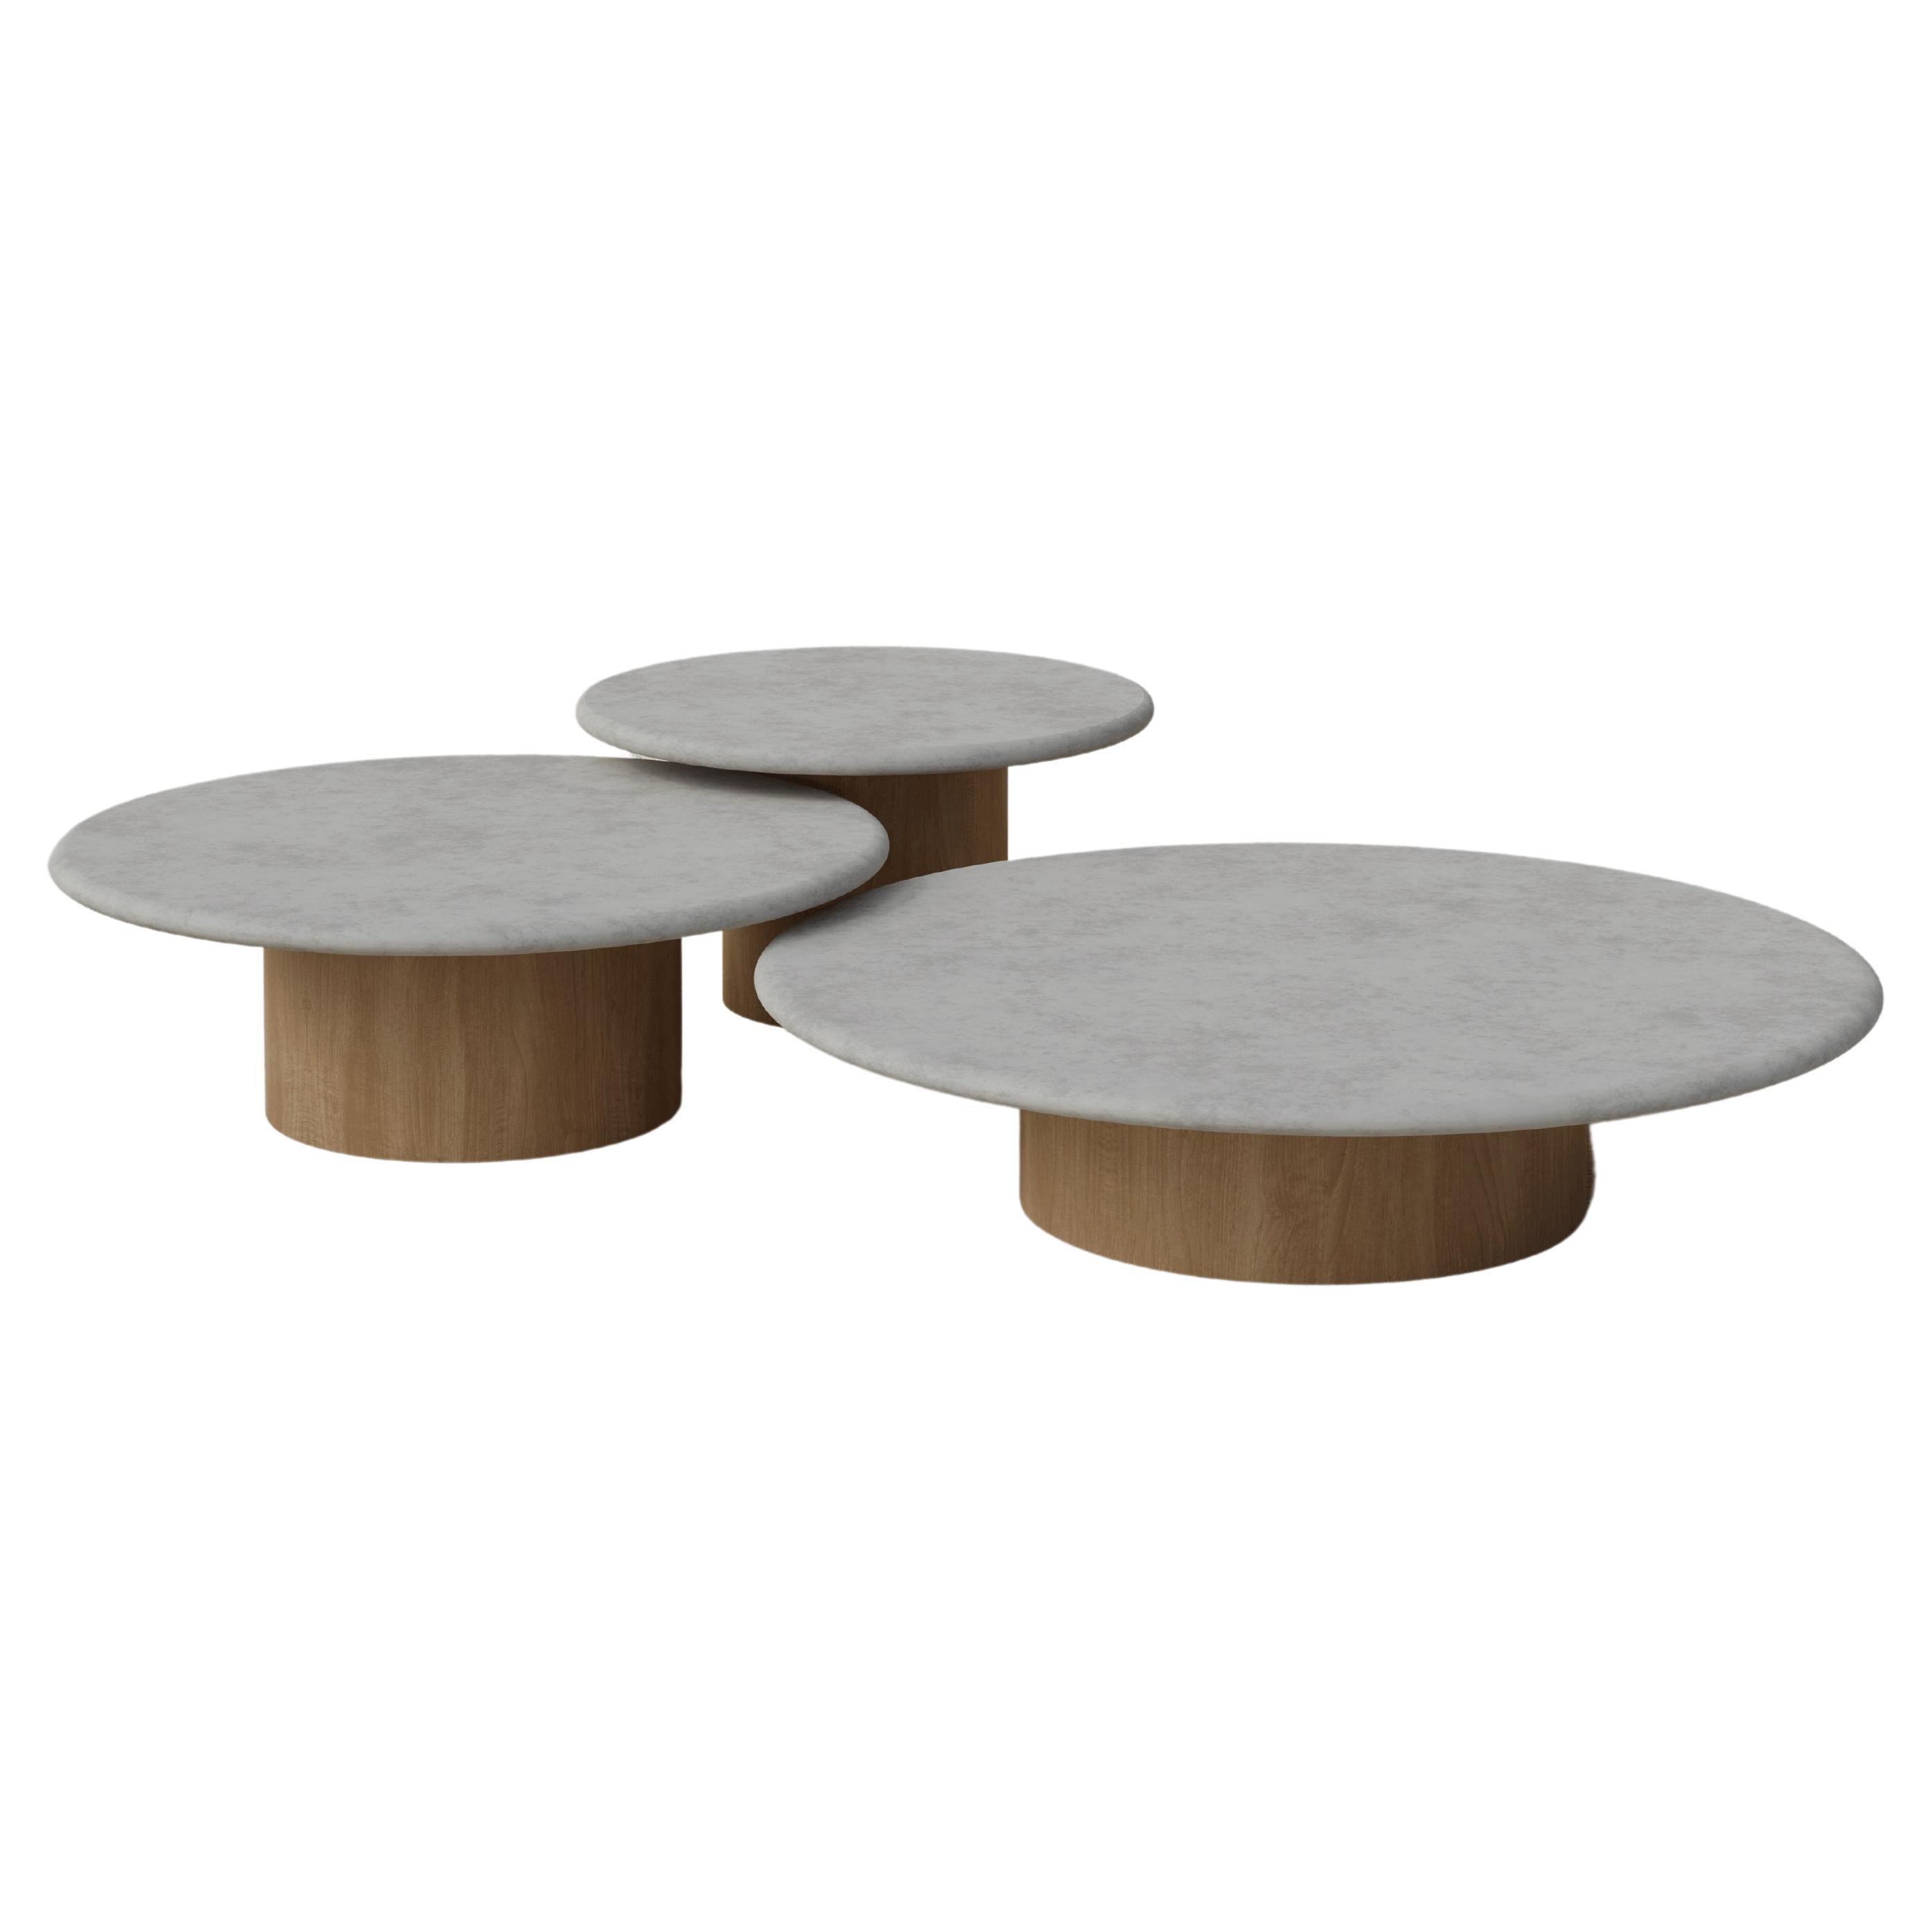 Raindrop Coffee Table Set, 600, 800, 1000, Microcrete / Oak